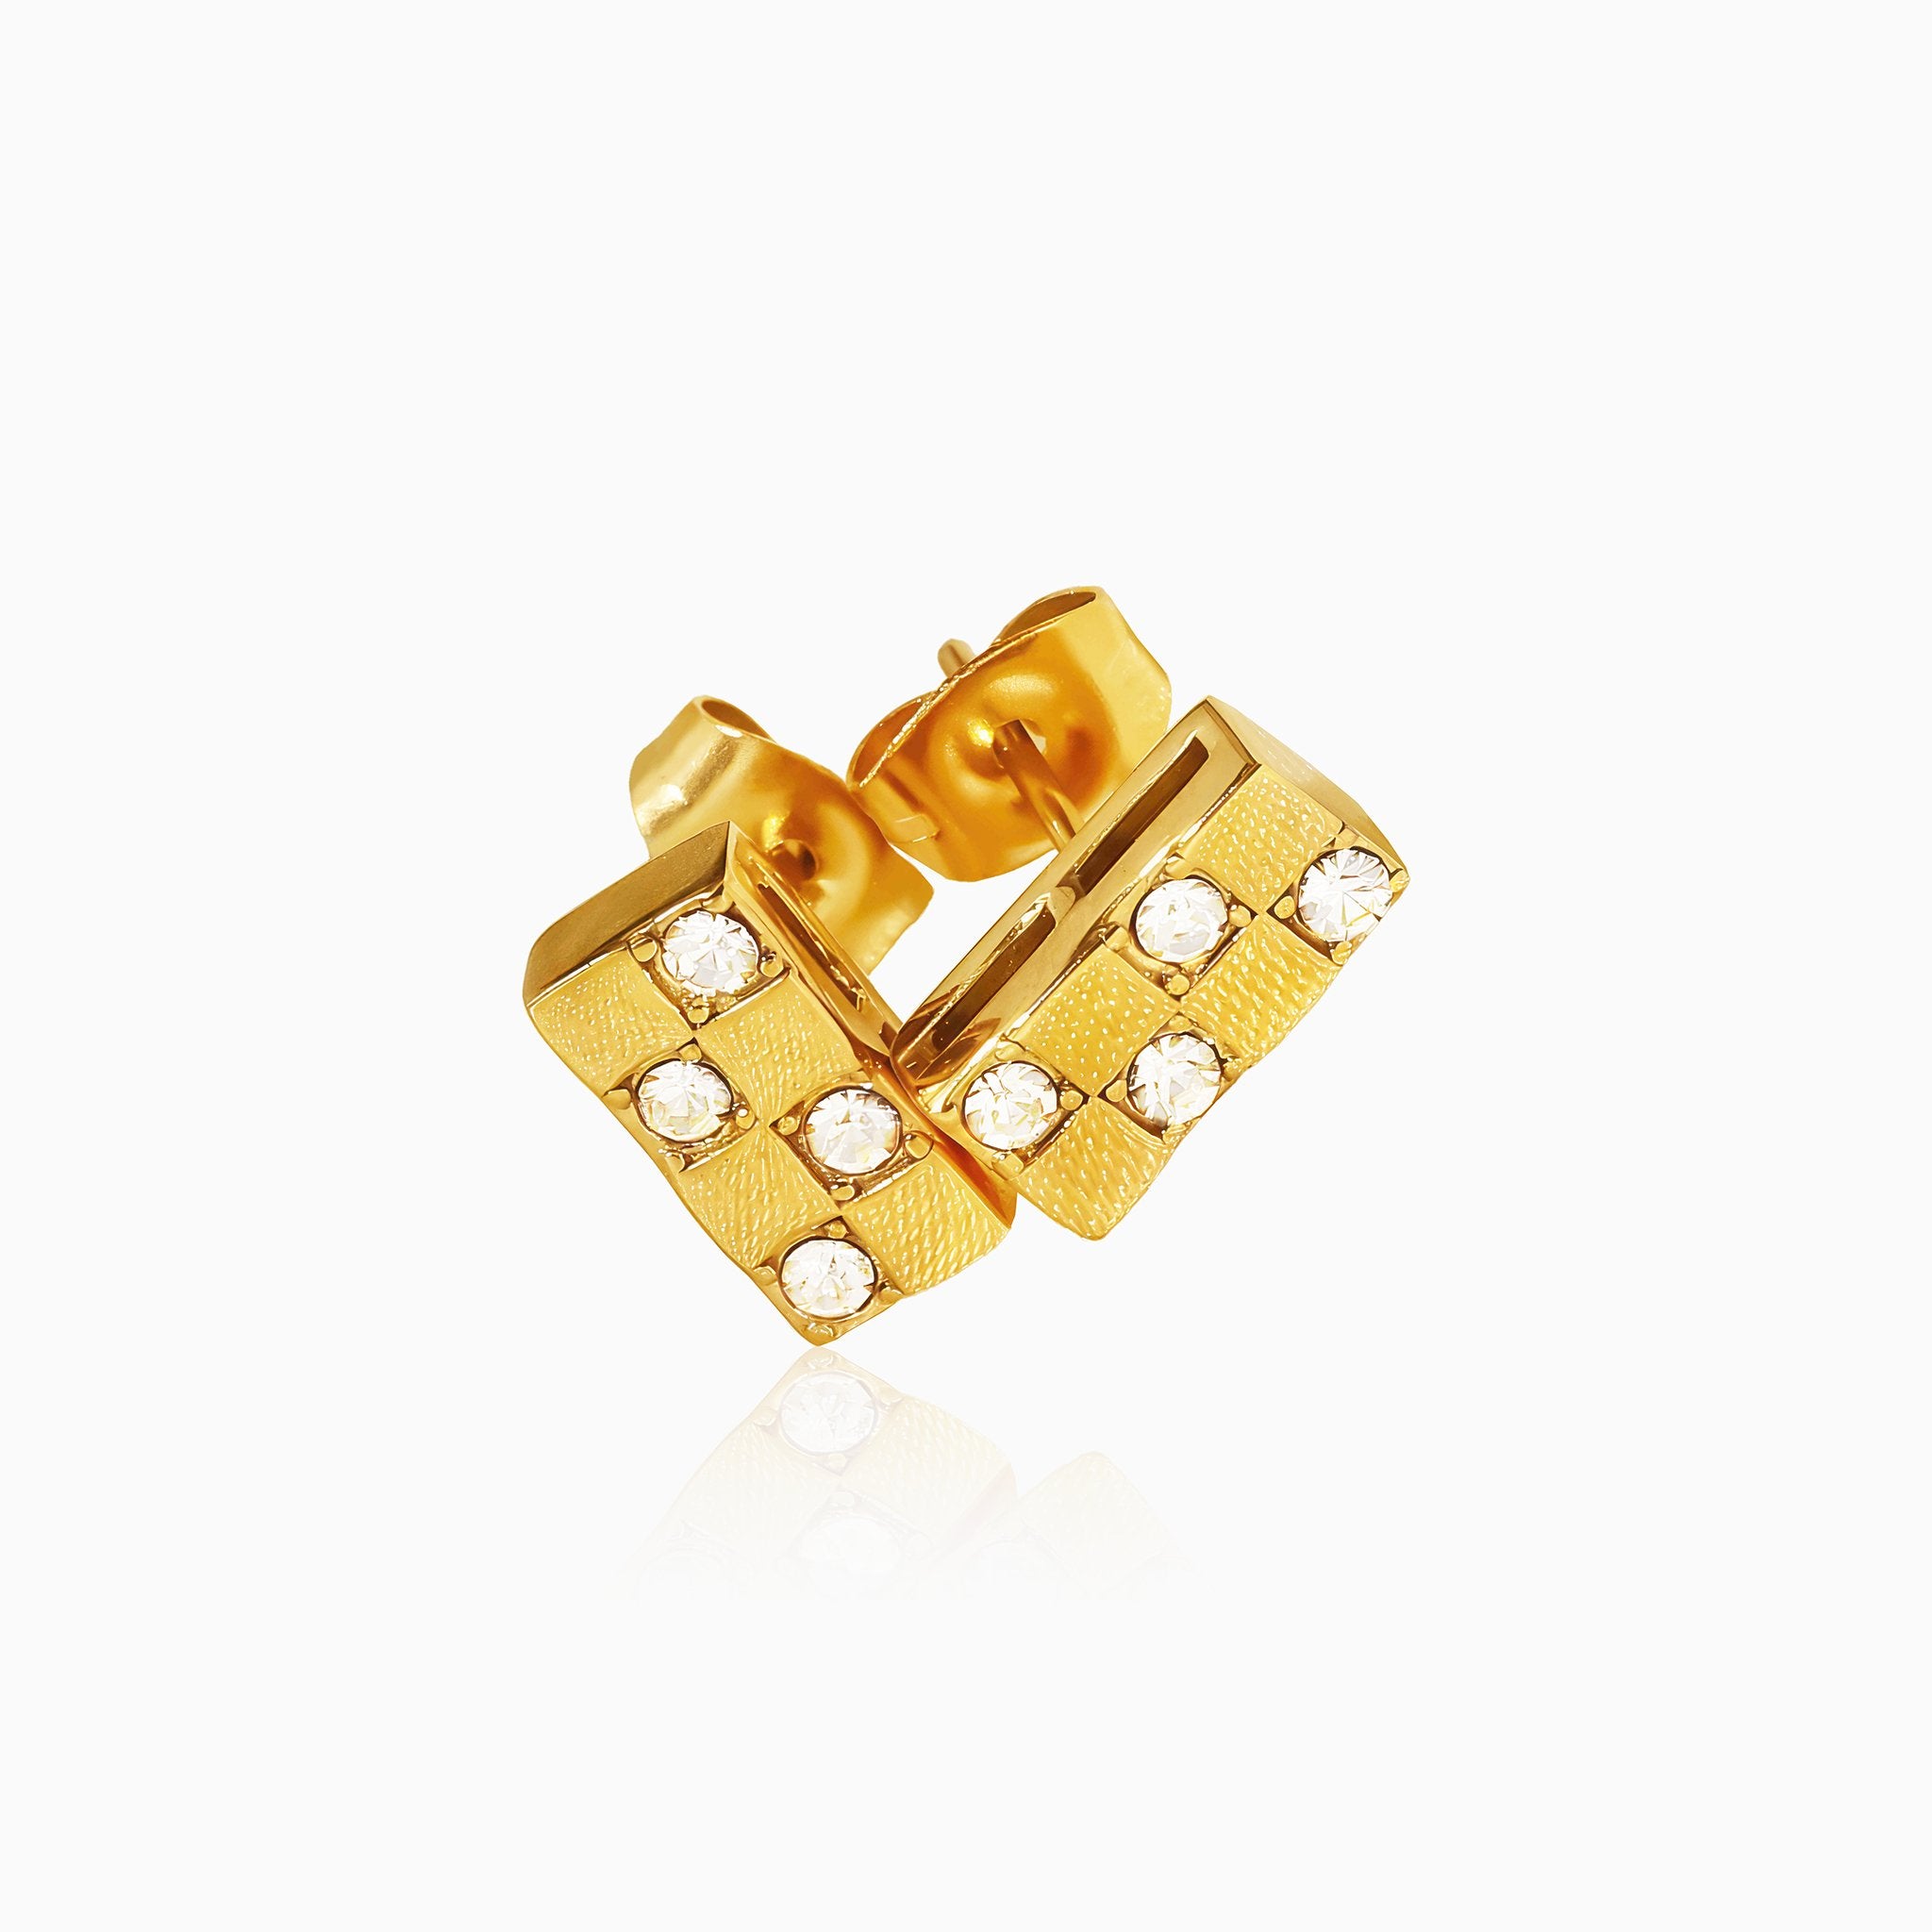 Rectangular Gemstone Earrings - Nobbier - Earrings - 18K Gold And Titanium PVD Coated Jewelry